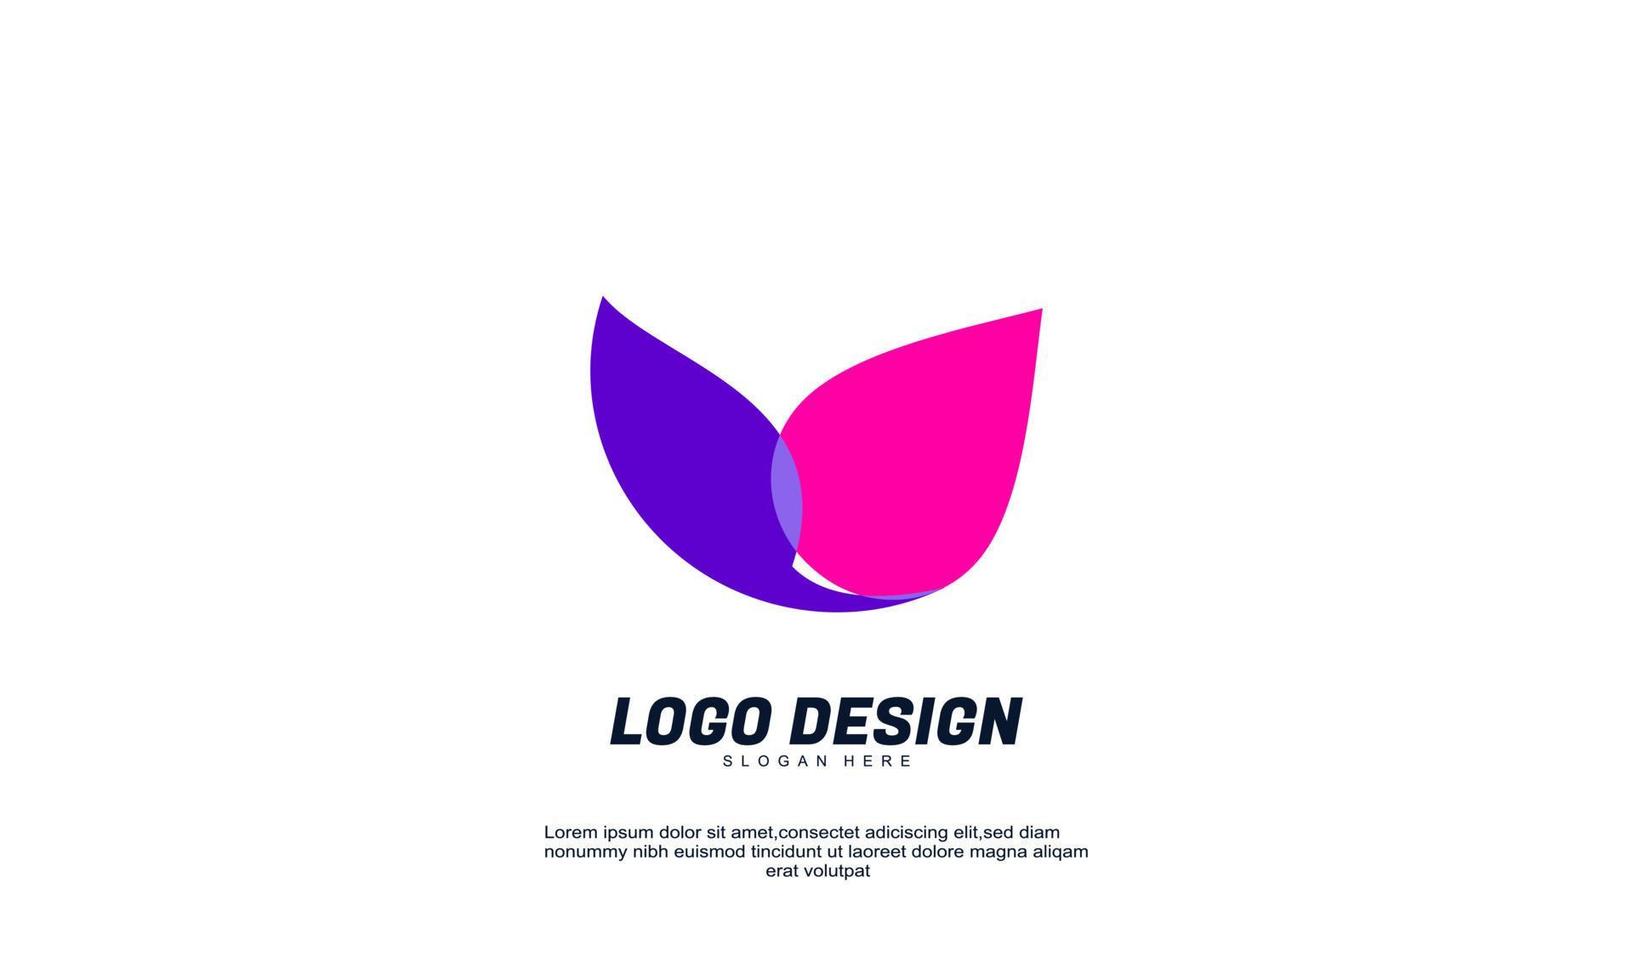 Stock abstraktes kreatives Firmengeschäft transparentes mehrfarbiges Farbverlaufsdesign-Logo mit flachem Design vektor